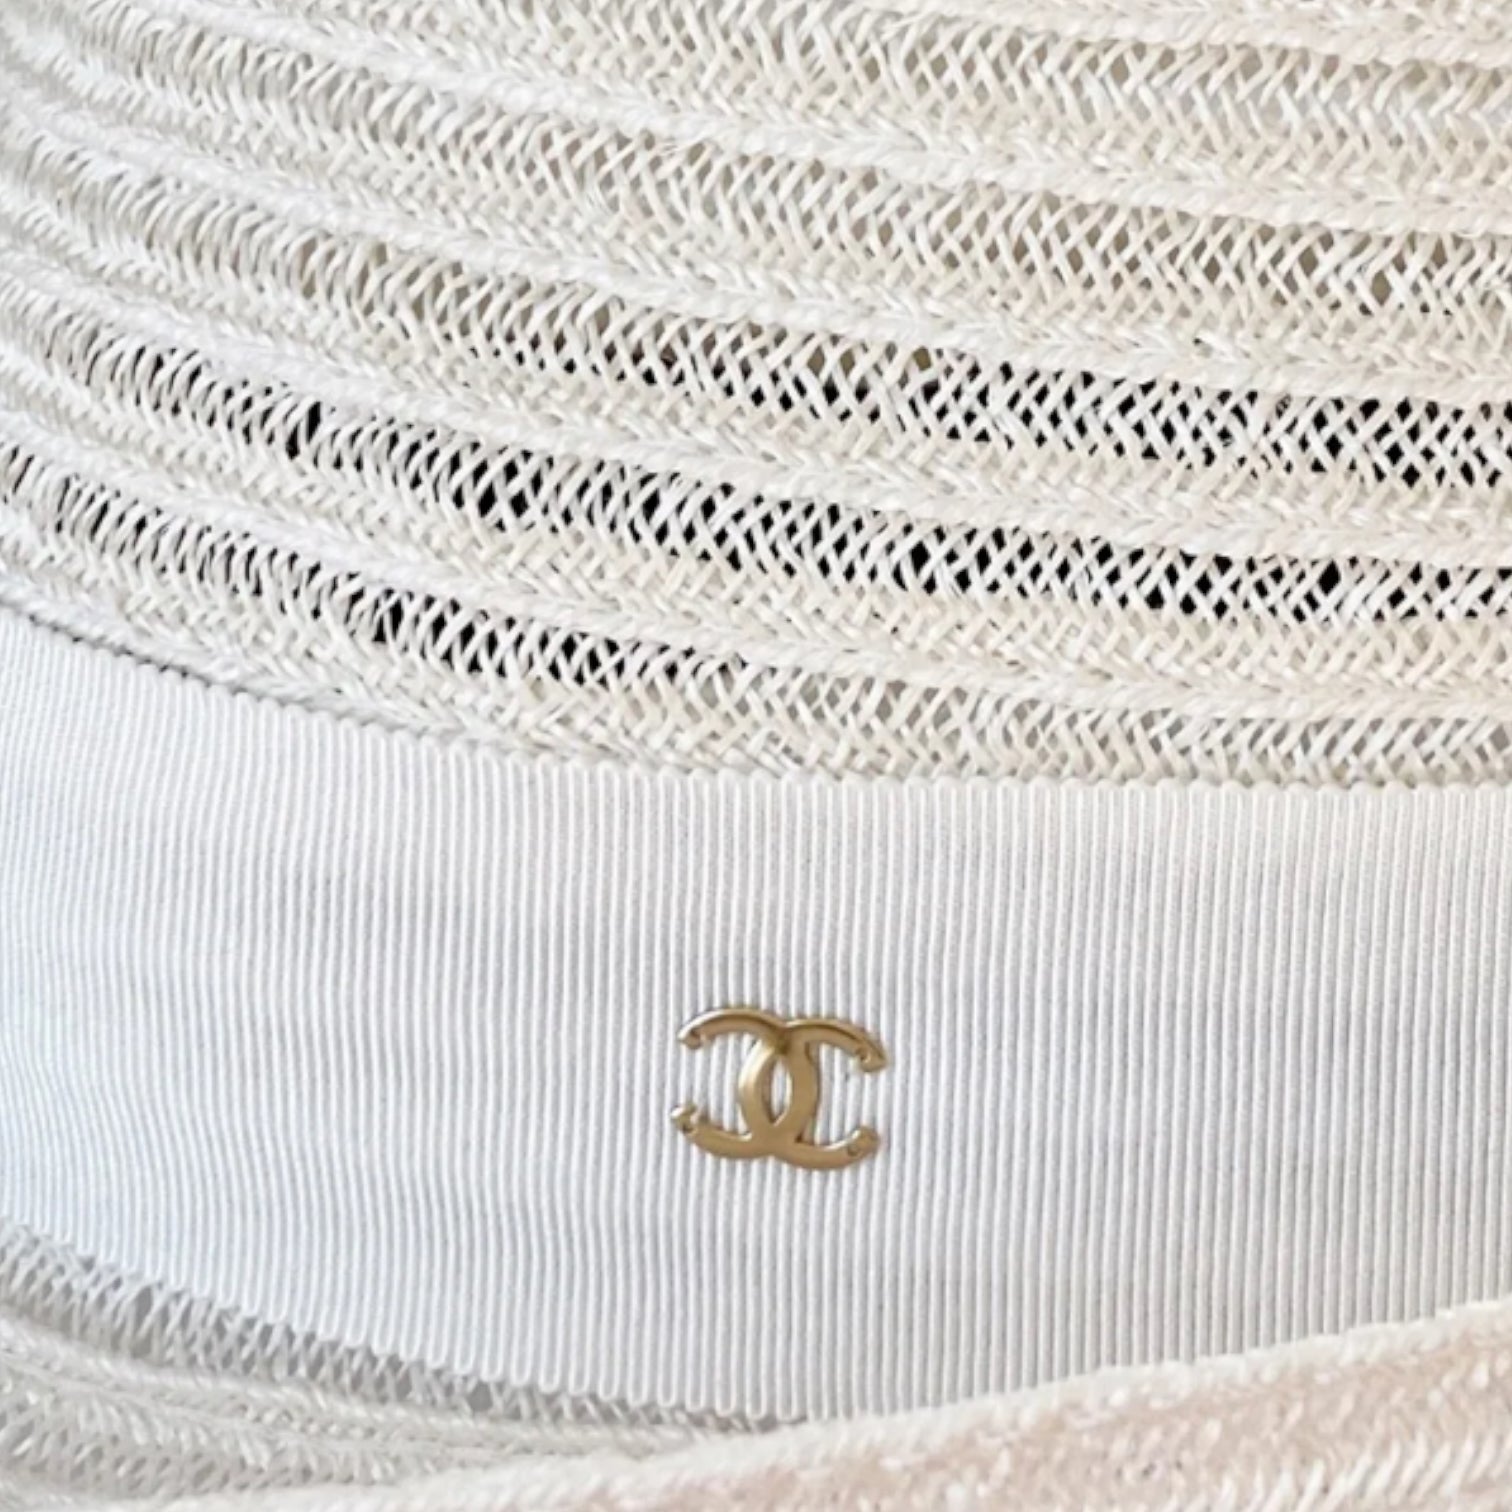 Chanel White 21C Fedora Hat – The Bag Broker